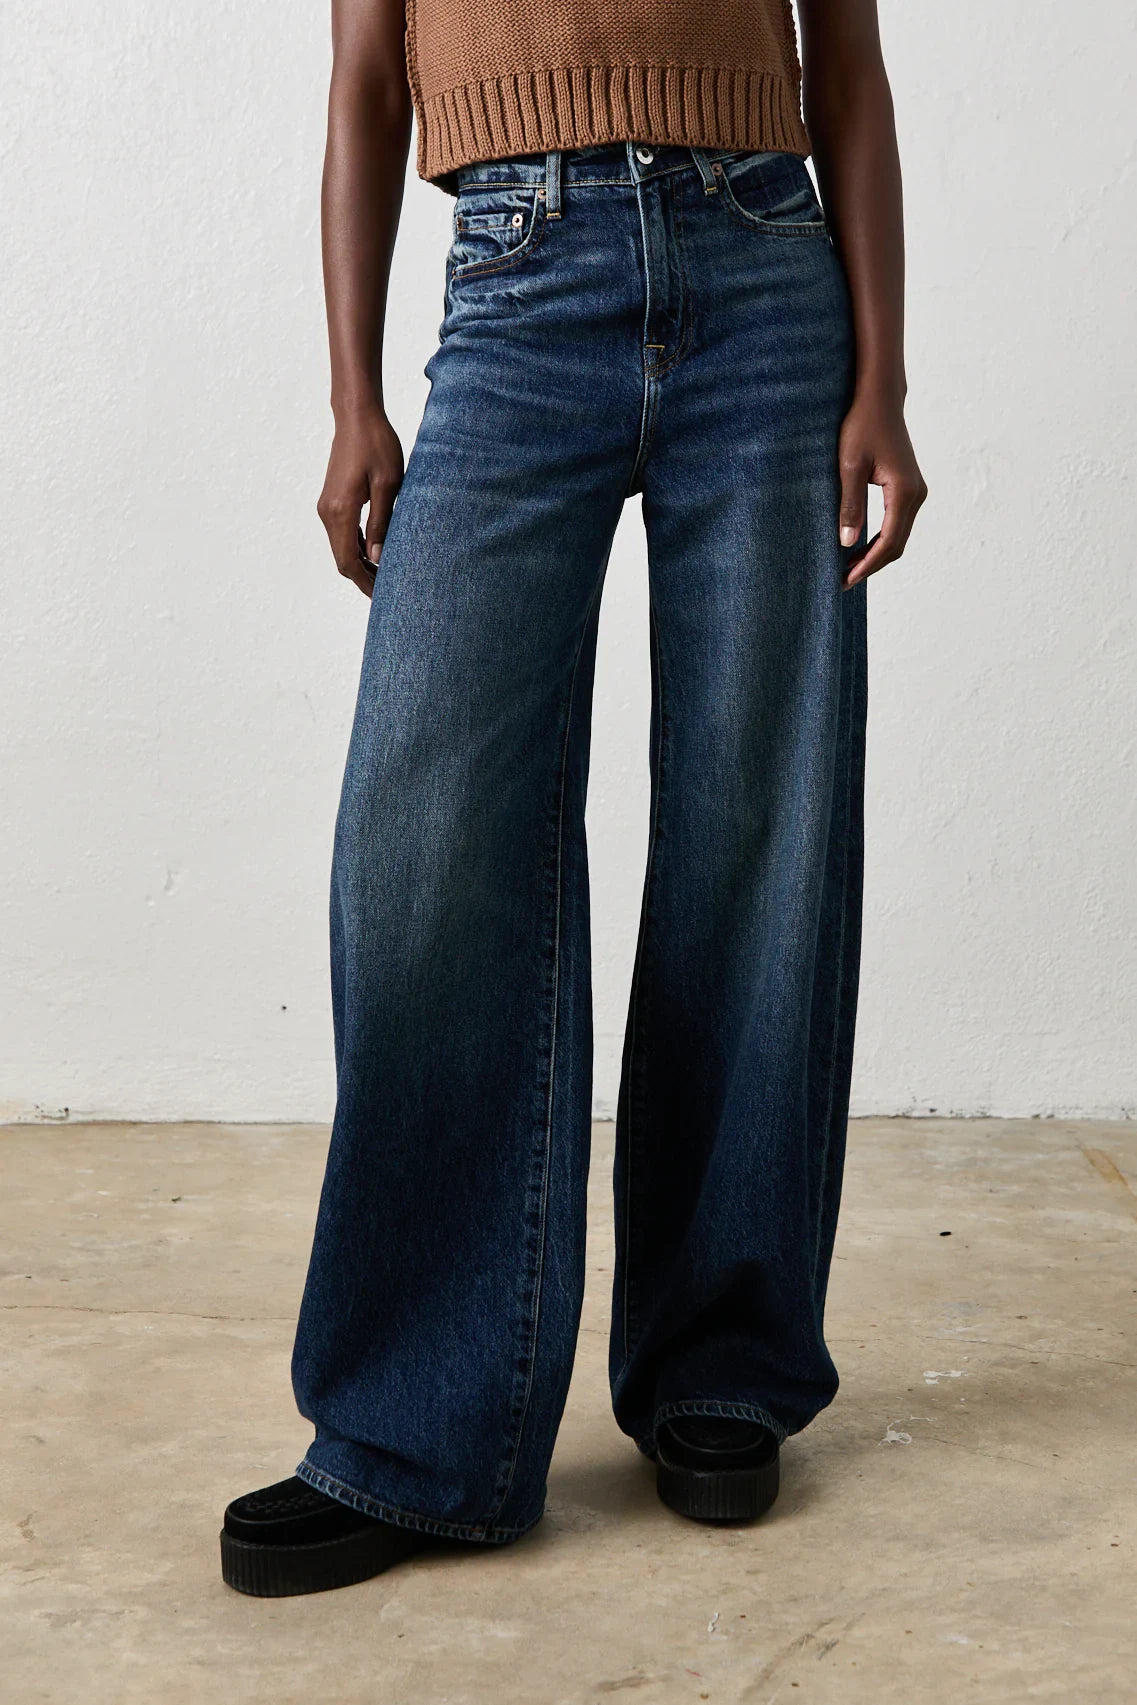 Delta Giant 5 Pocket Jean Pants NSF Clothing   